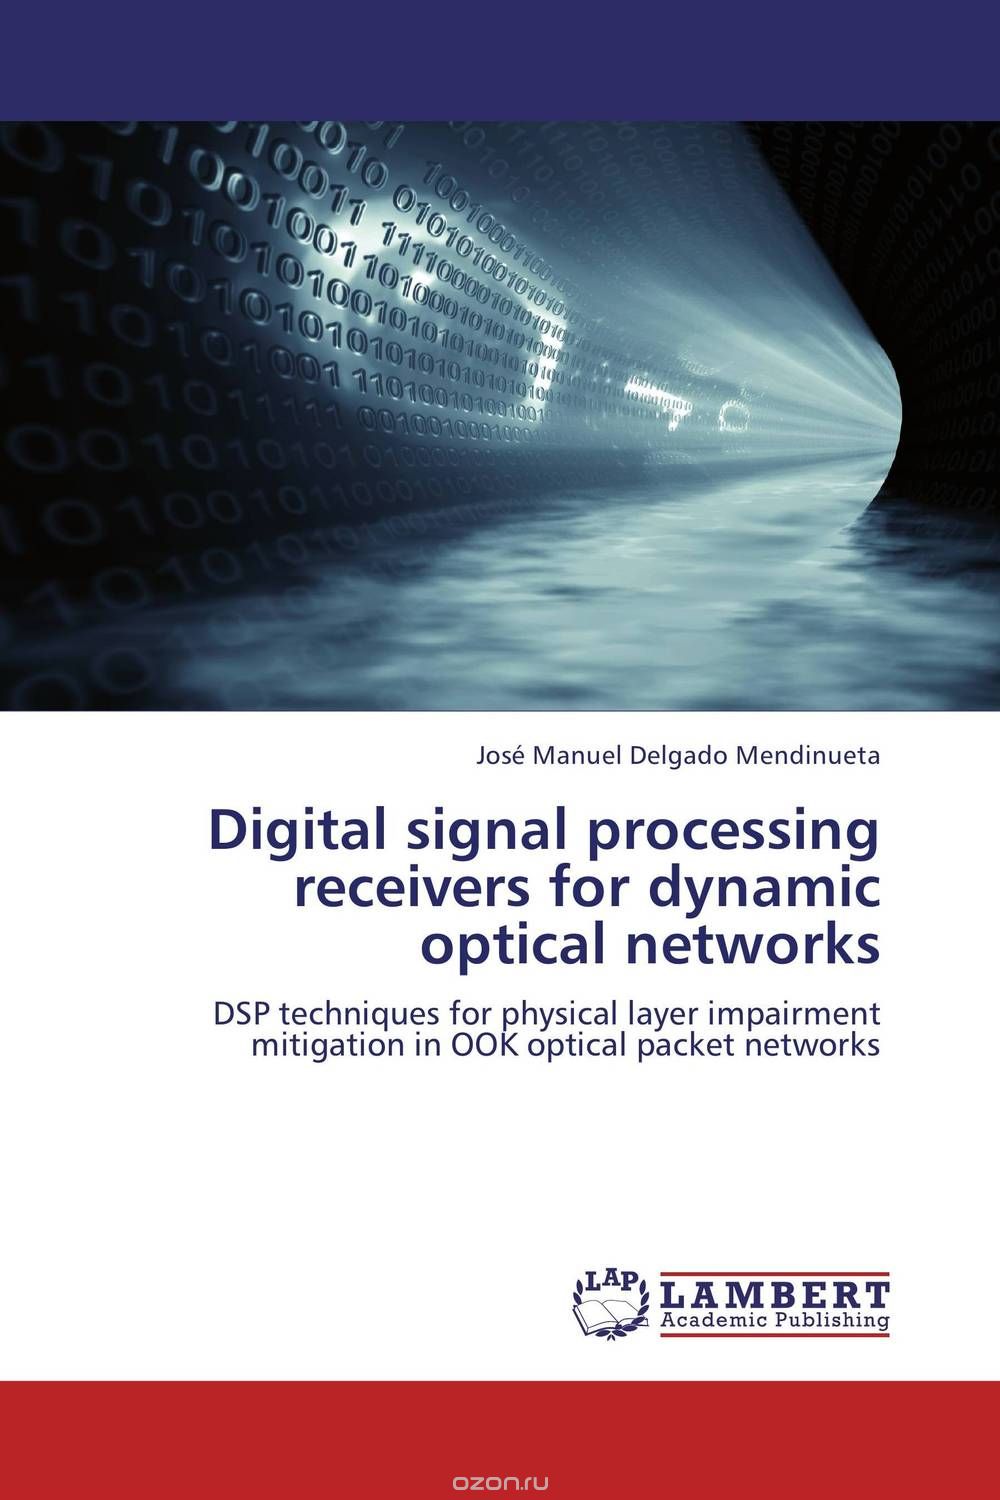 Скачать книгу "Digital signal processing receivers for dynamic optical networks"